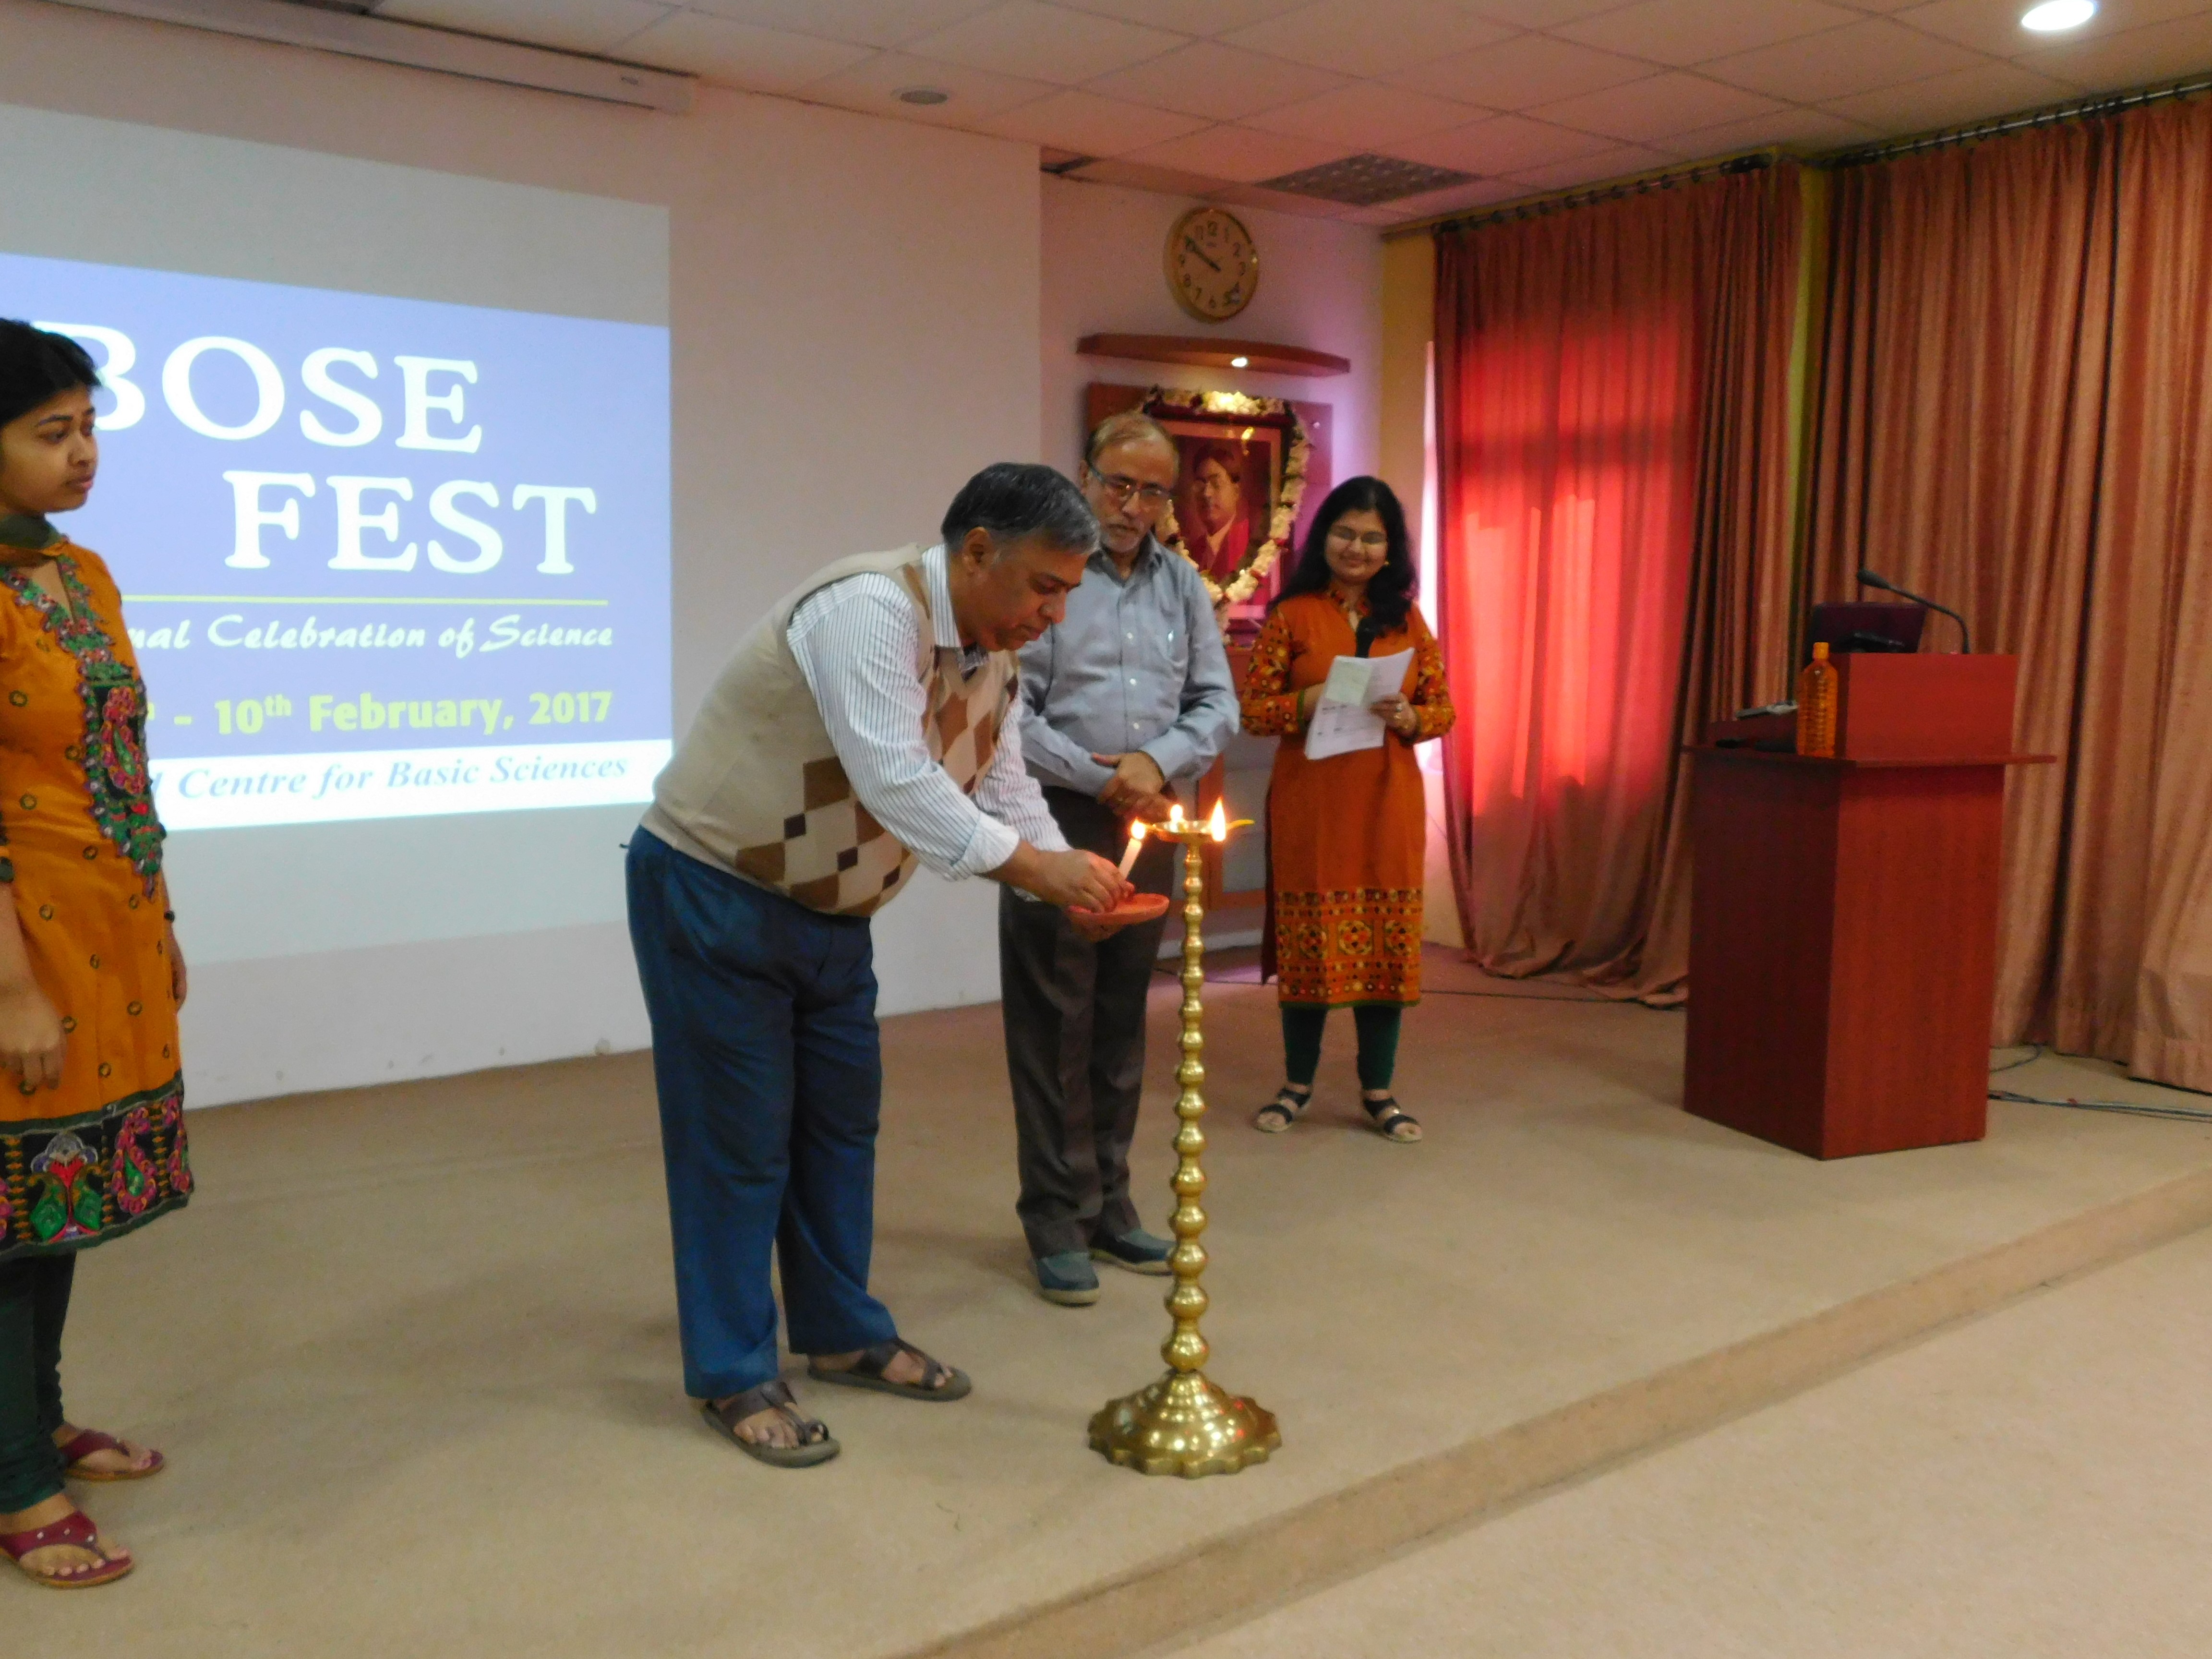 Inauguration of Bose Fest